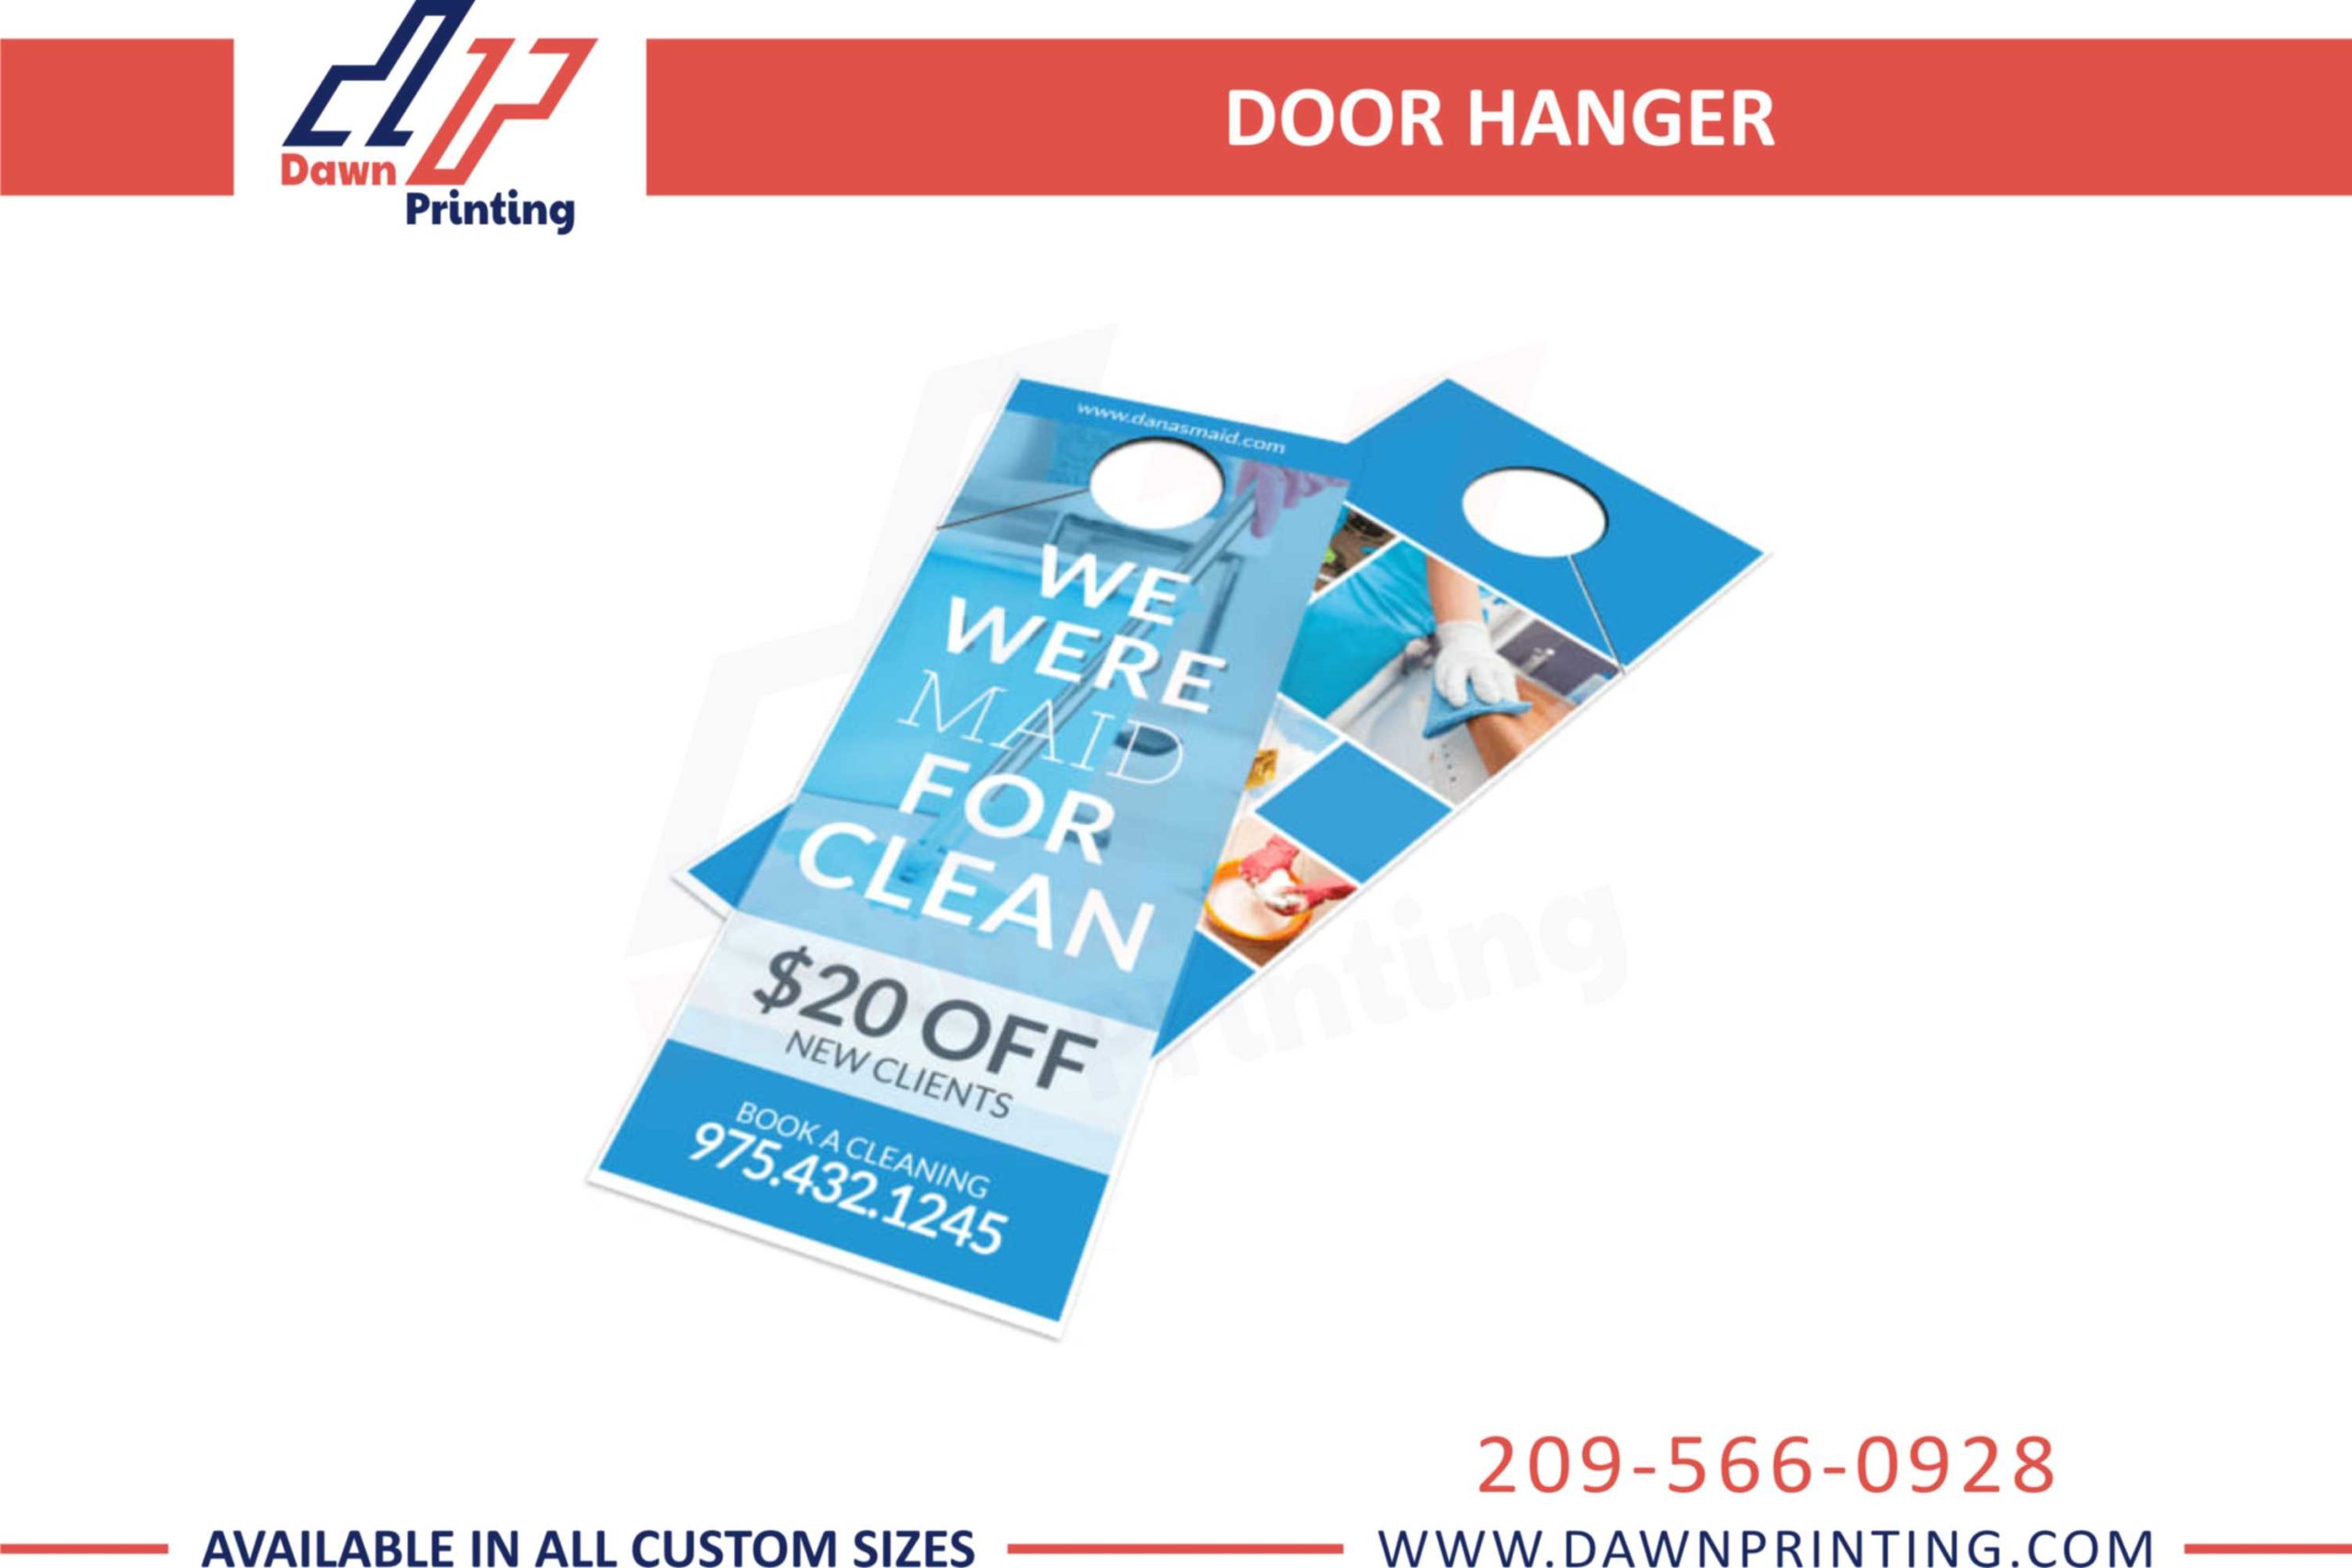 Custom Door Hangers Printing - Dawn Printing